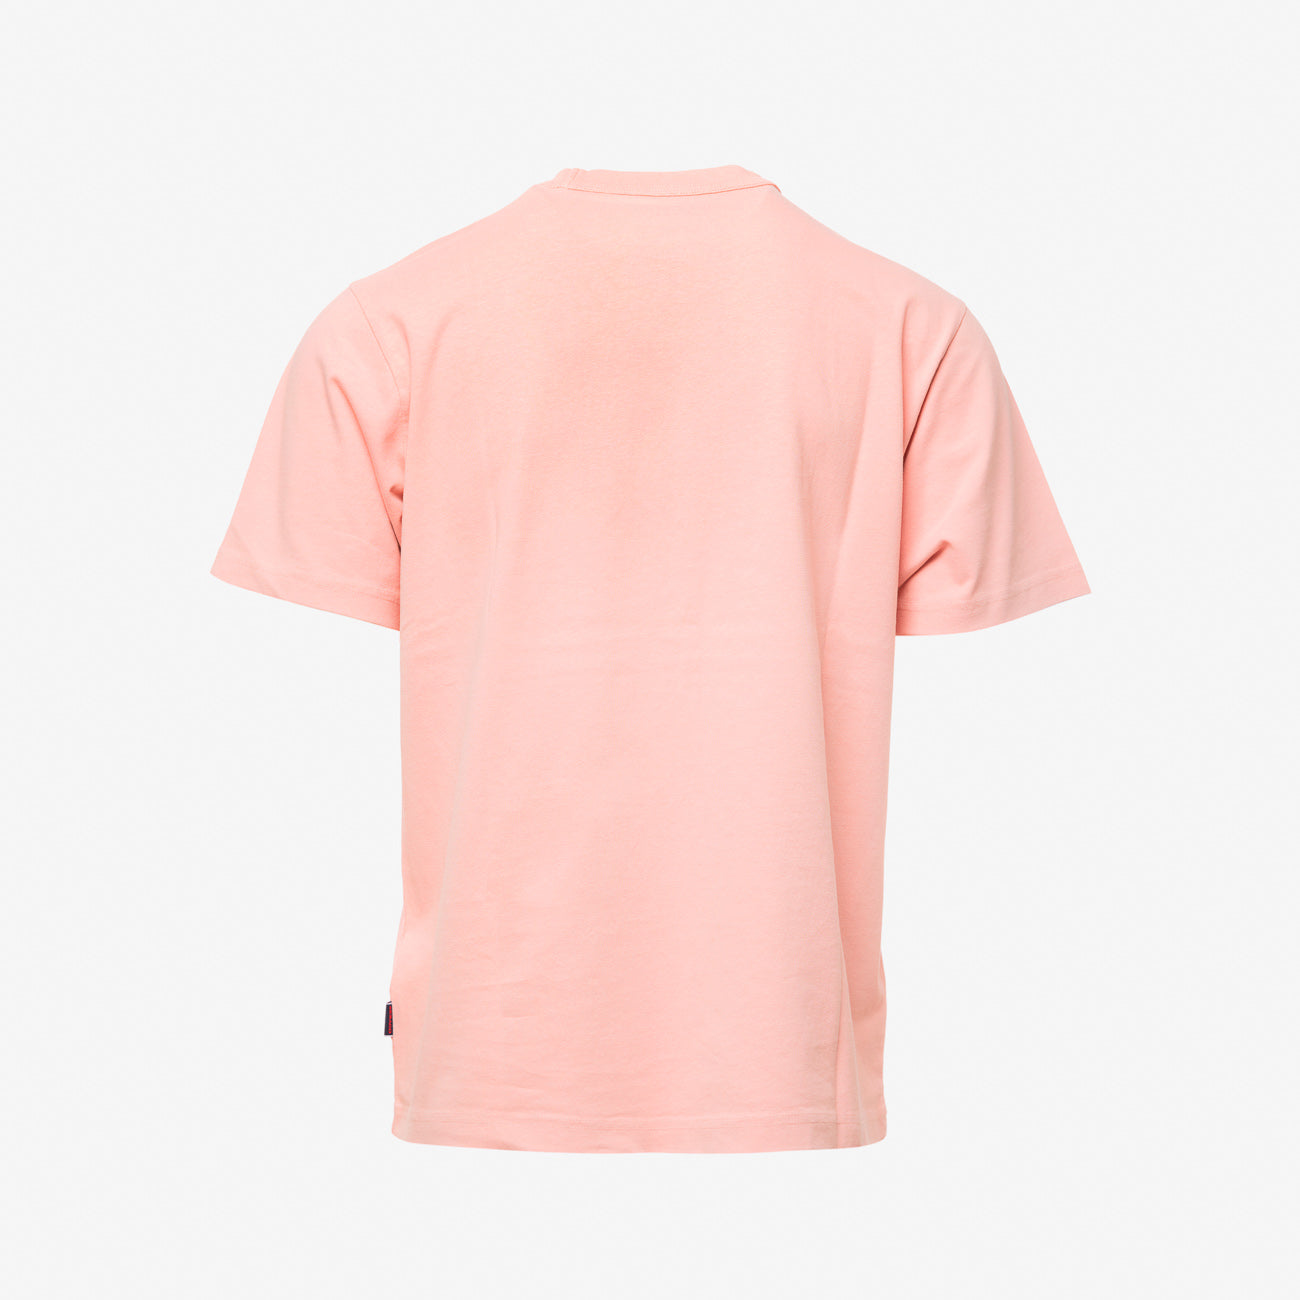 Sebago Daforth short-sleeved T-shirt in pink cotton